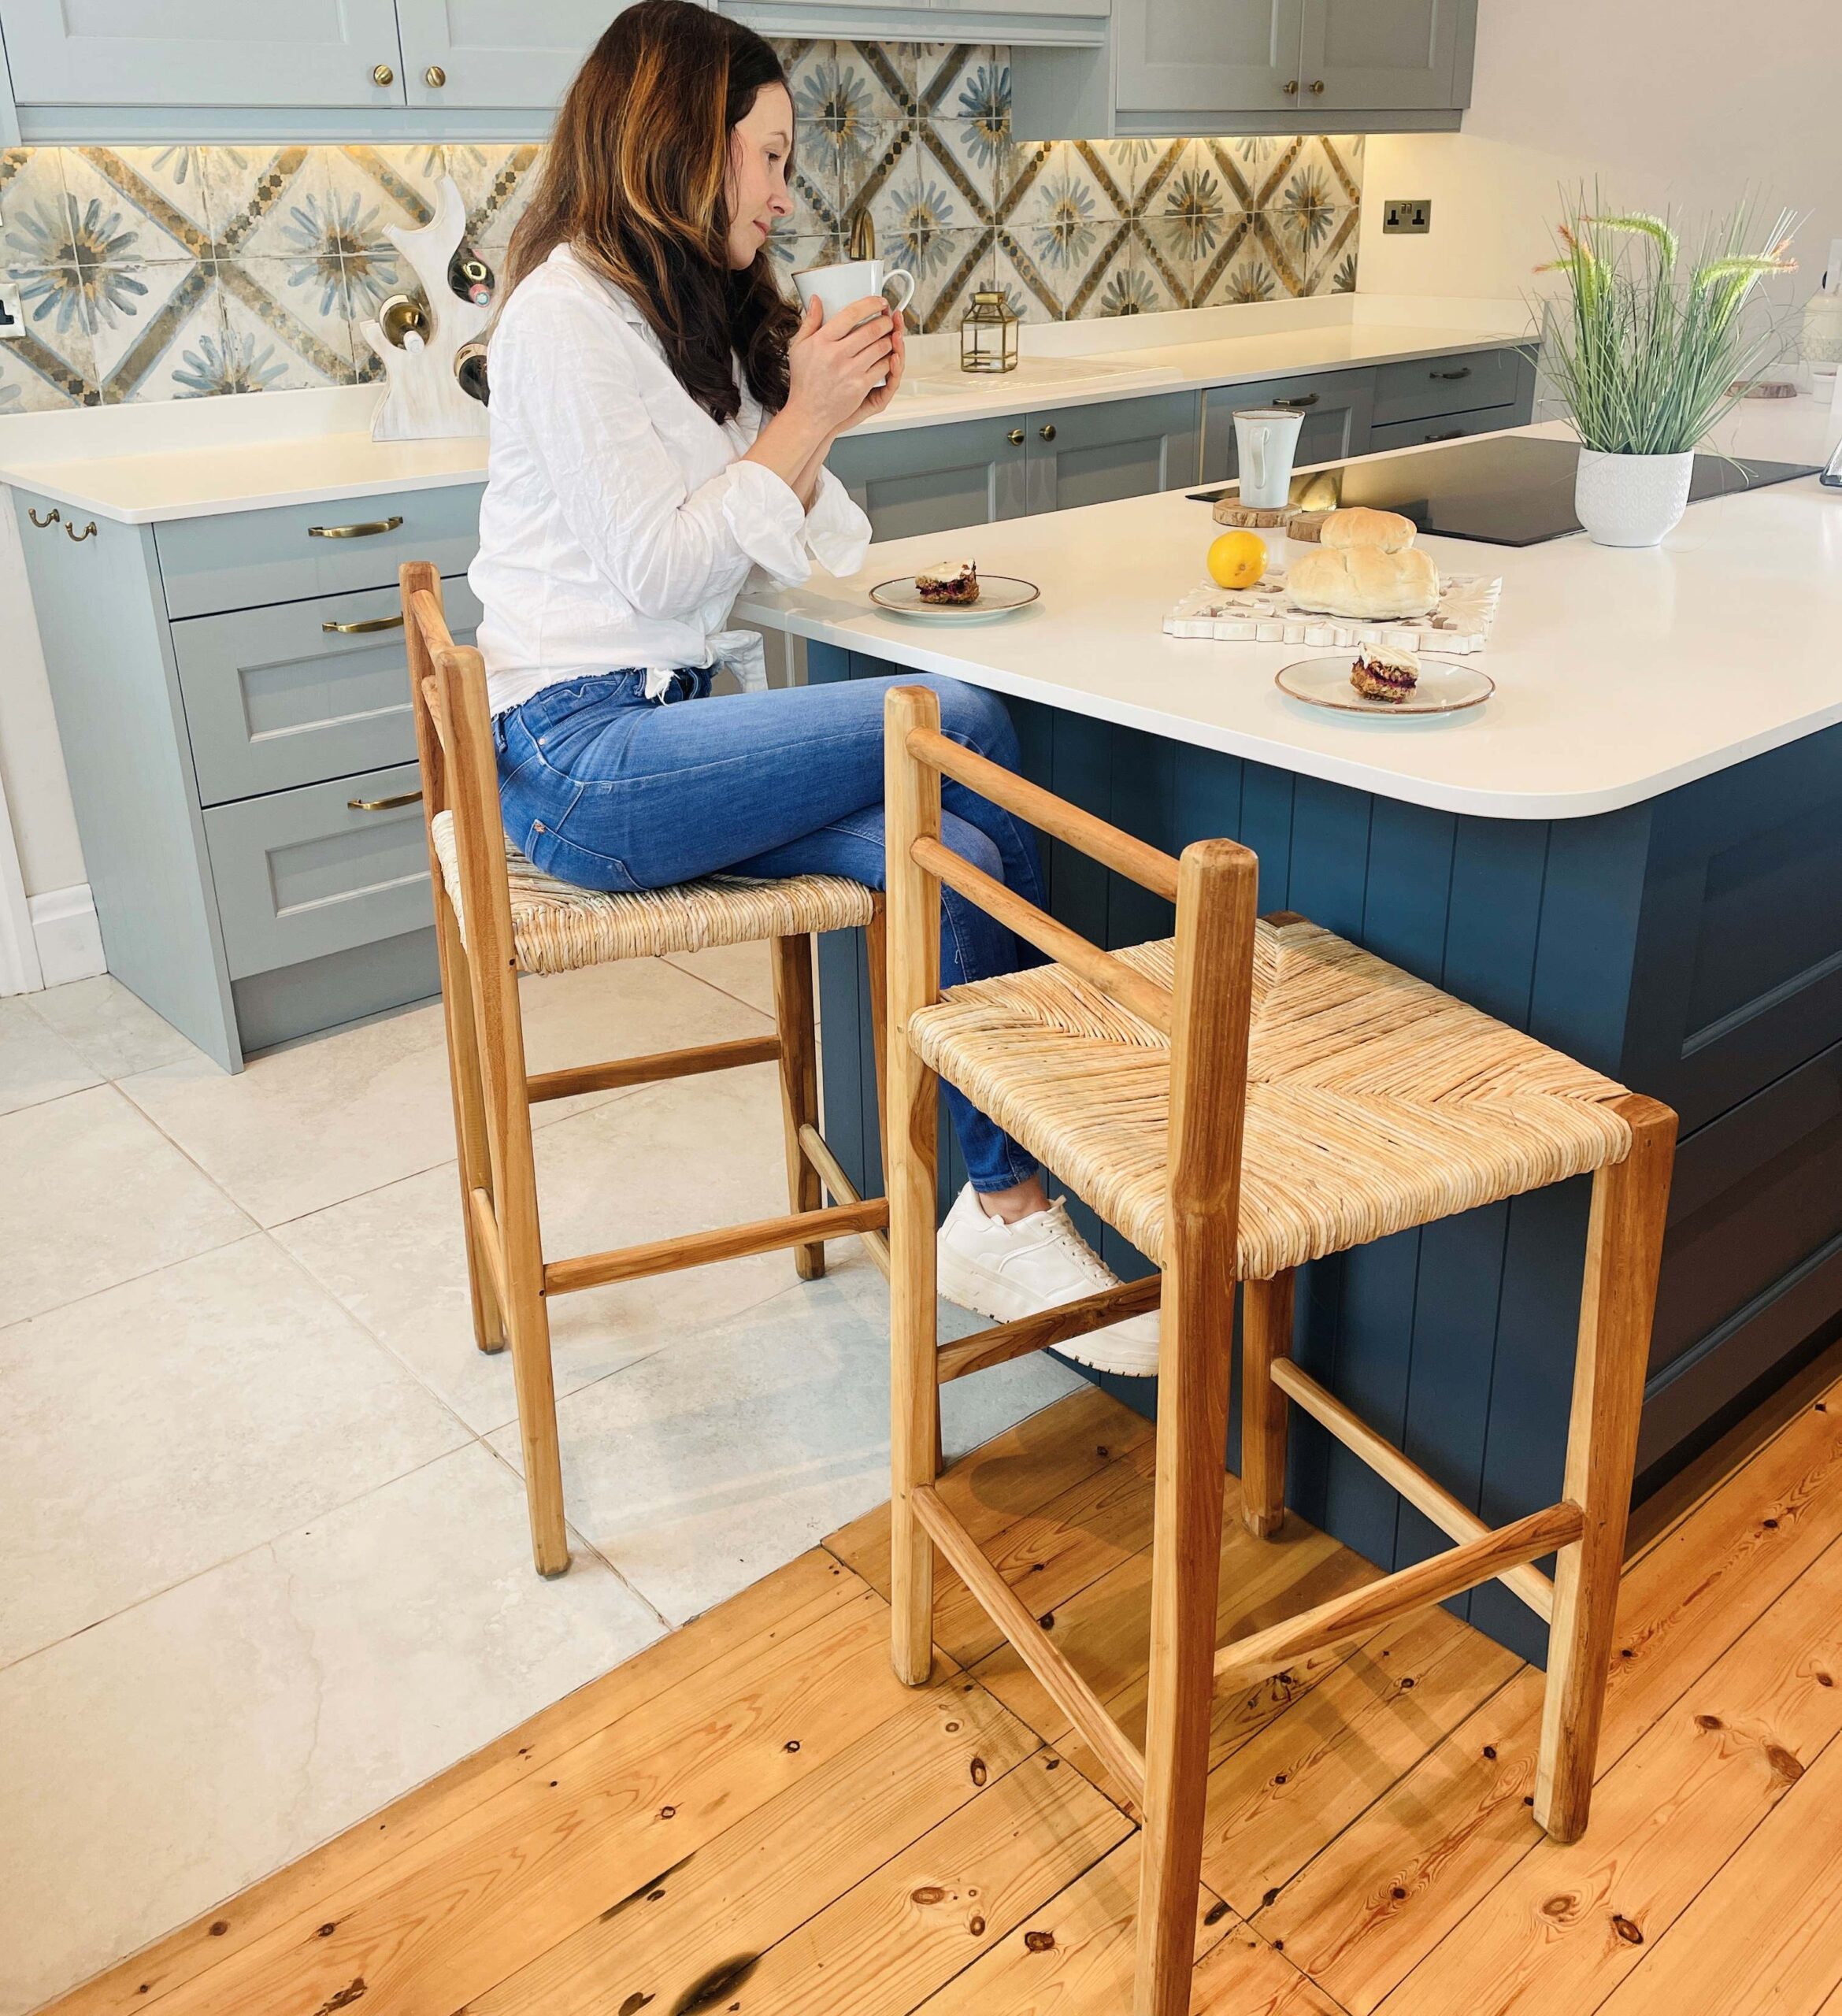 Woman sitting on wicker kitchen stool in kitchen at blue kitchen island